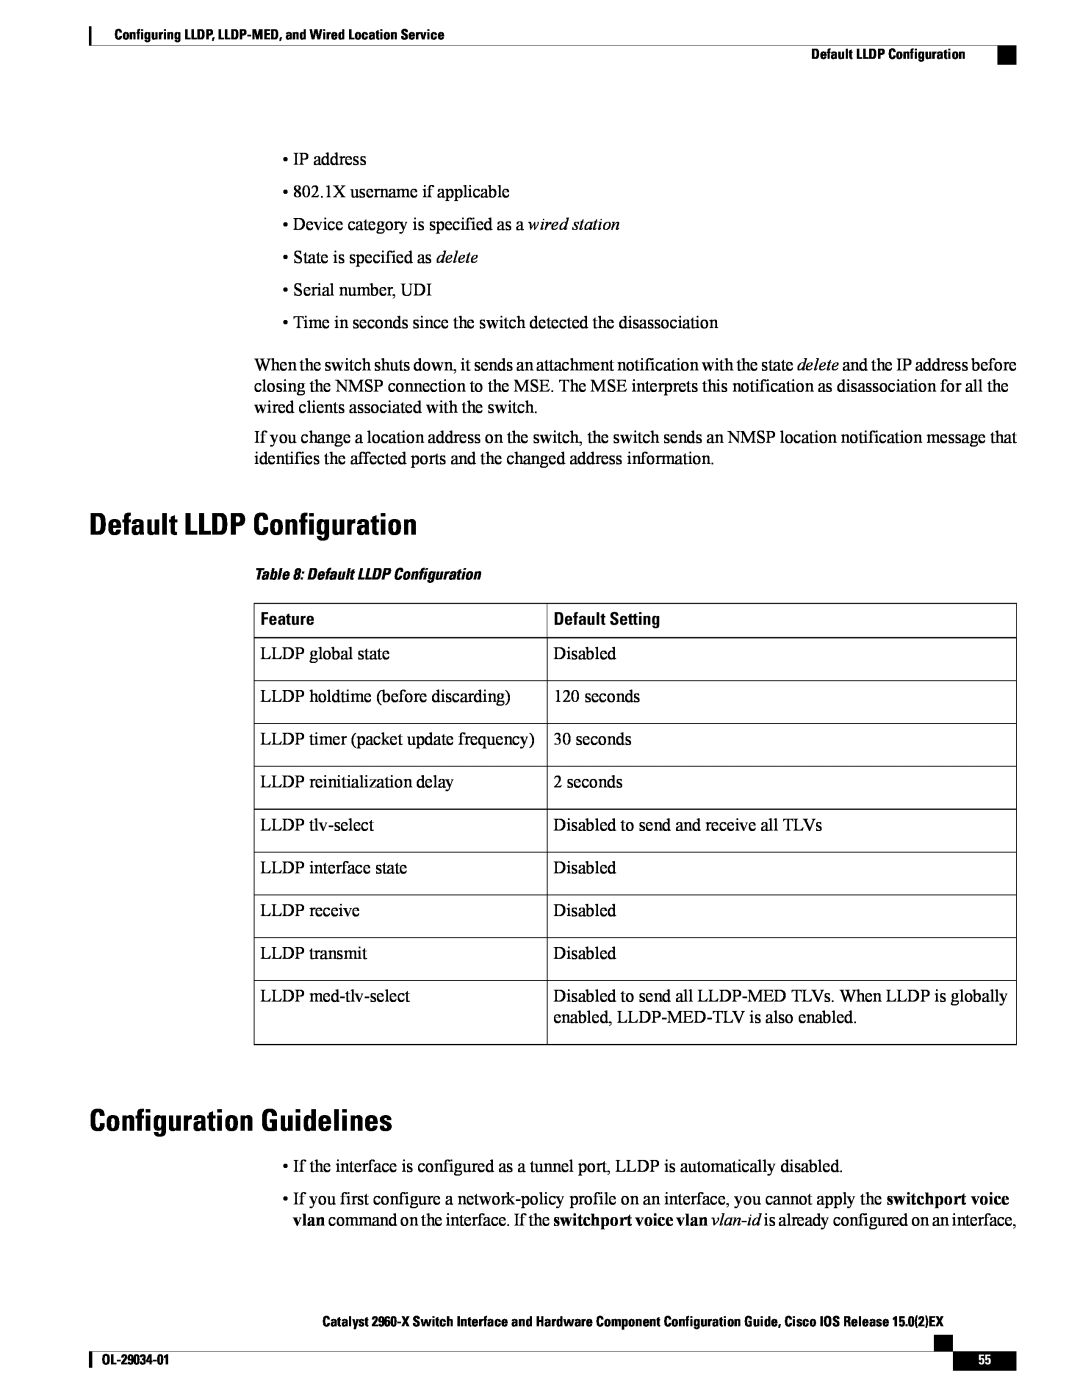 Cisco Systems WSC2960X48TDL manual Default LLDP Configuration, Configuration Guidelines, Feature, Default Setting 